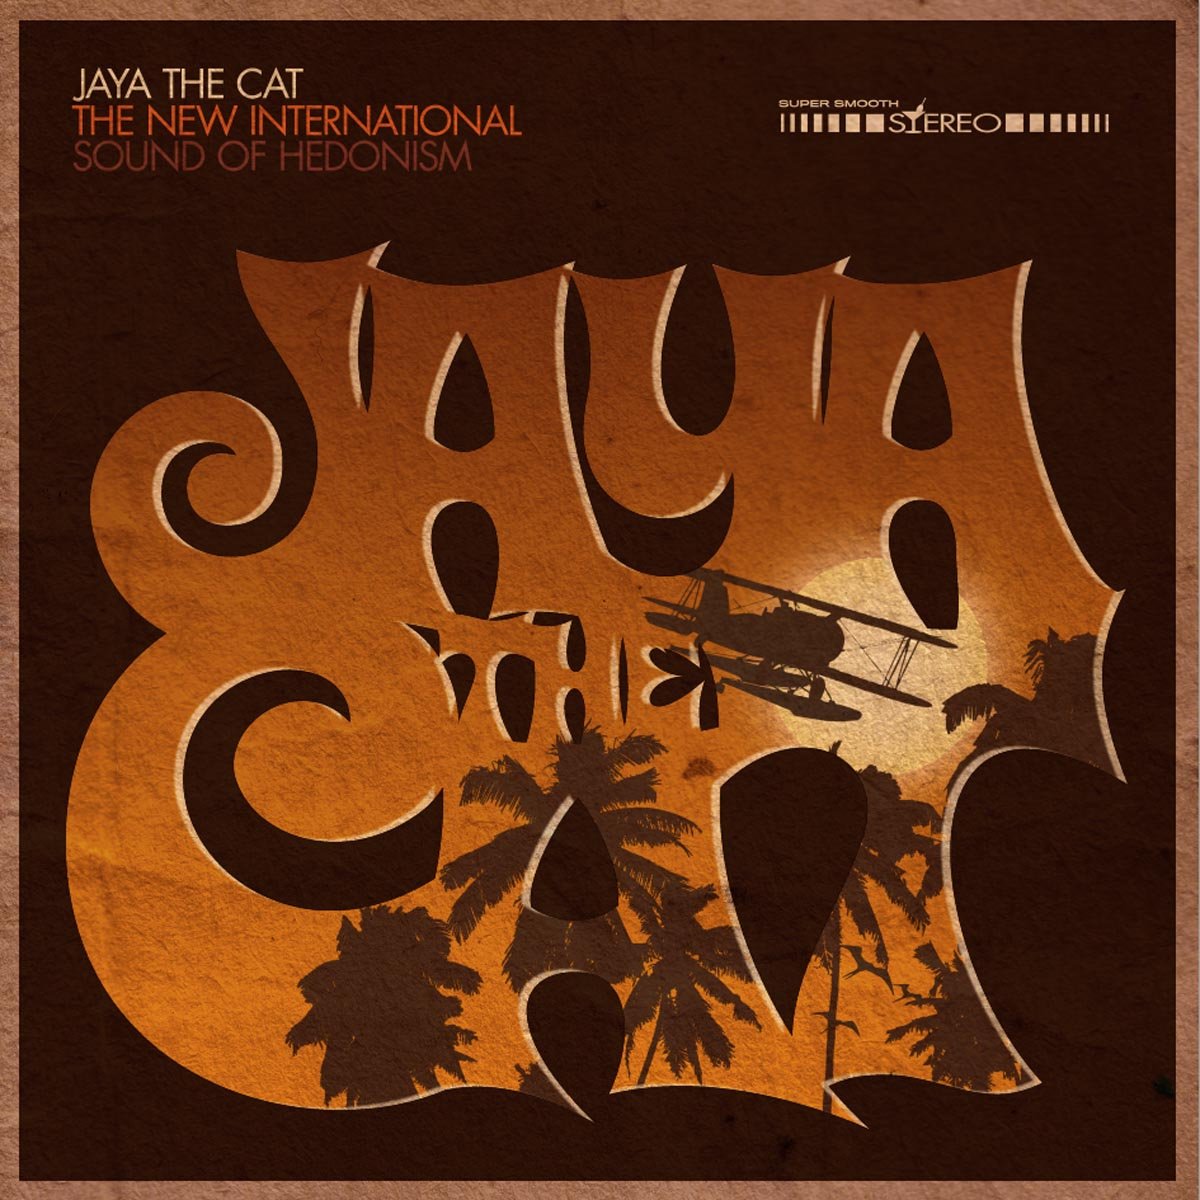 Jaya the Cat - "The New International Sound of Hedonism" vinyl LP